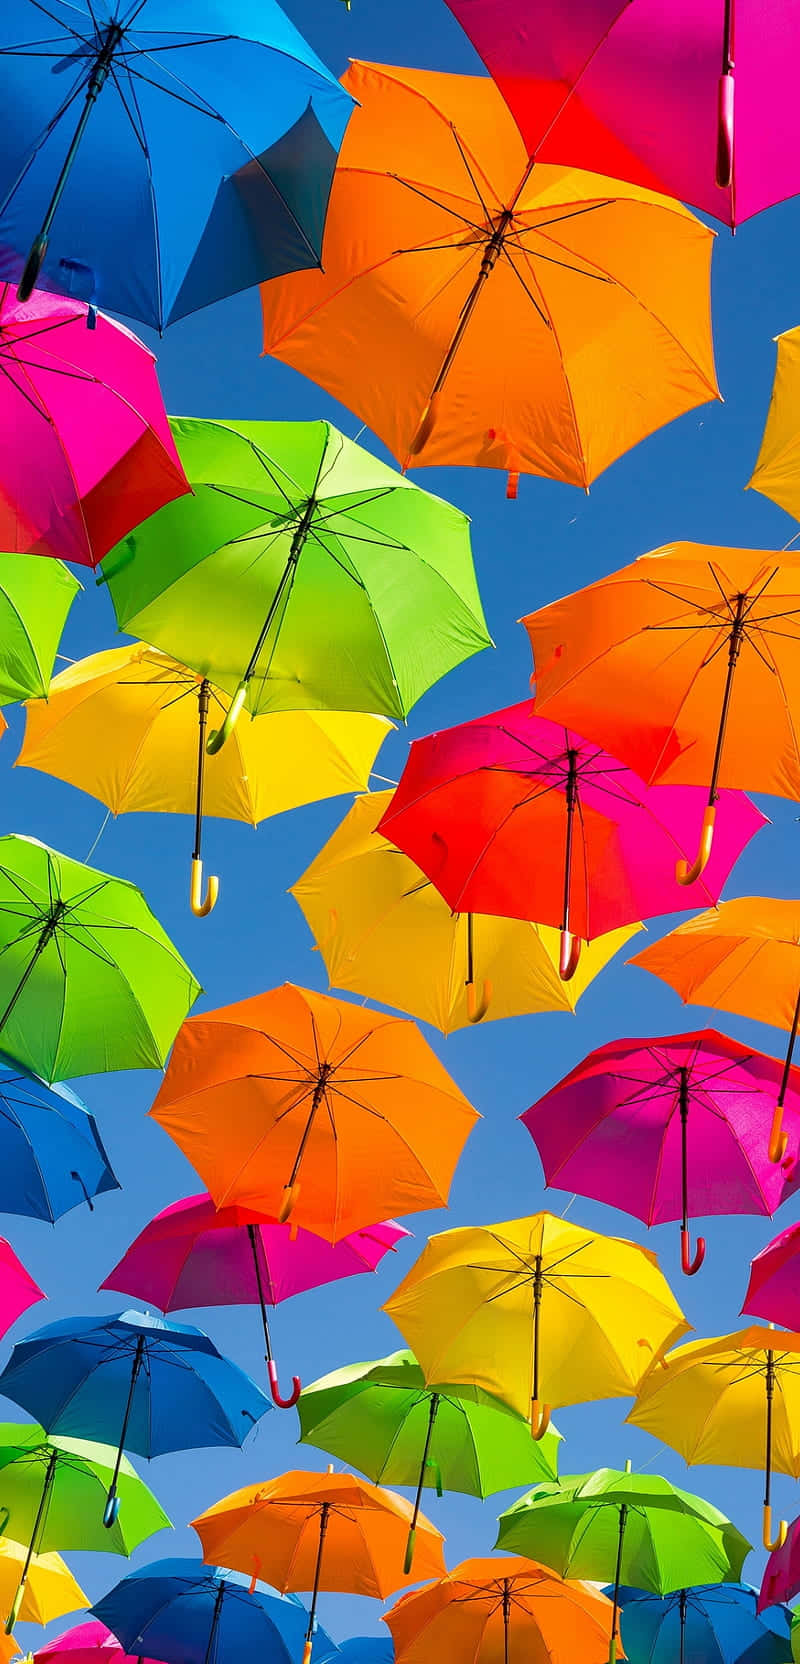 Colorful Umbrella Canopy Sky Wallpaper